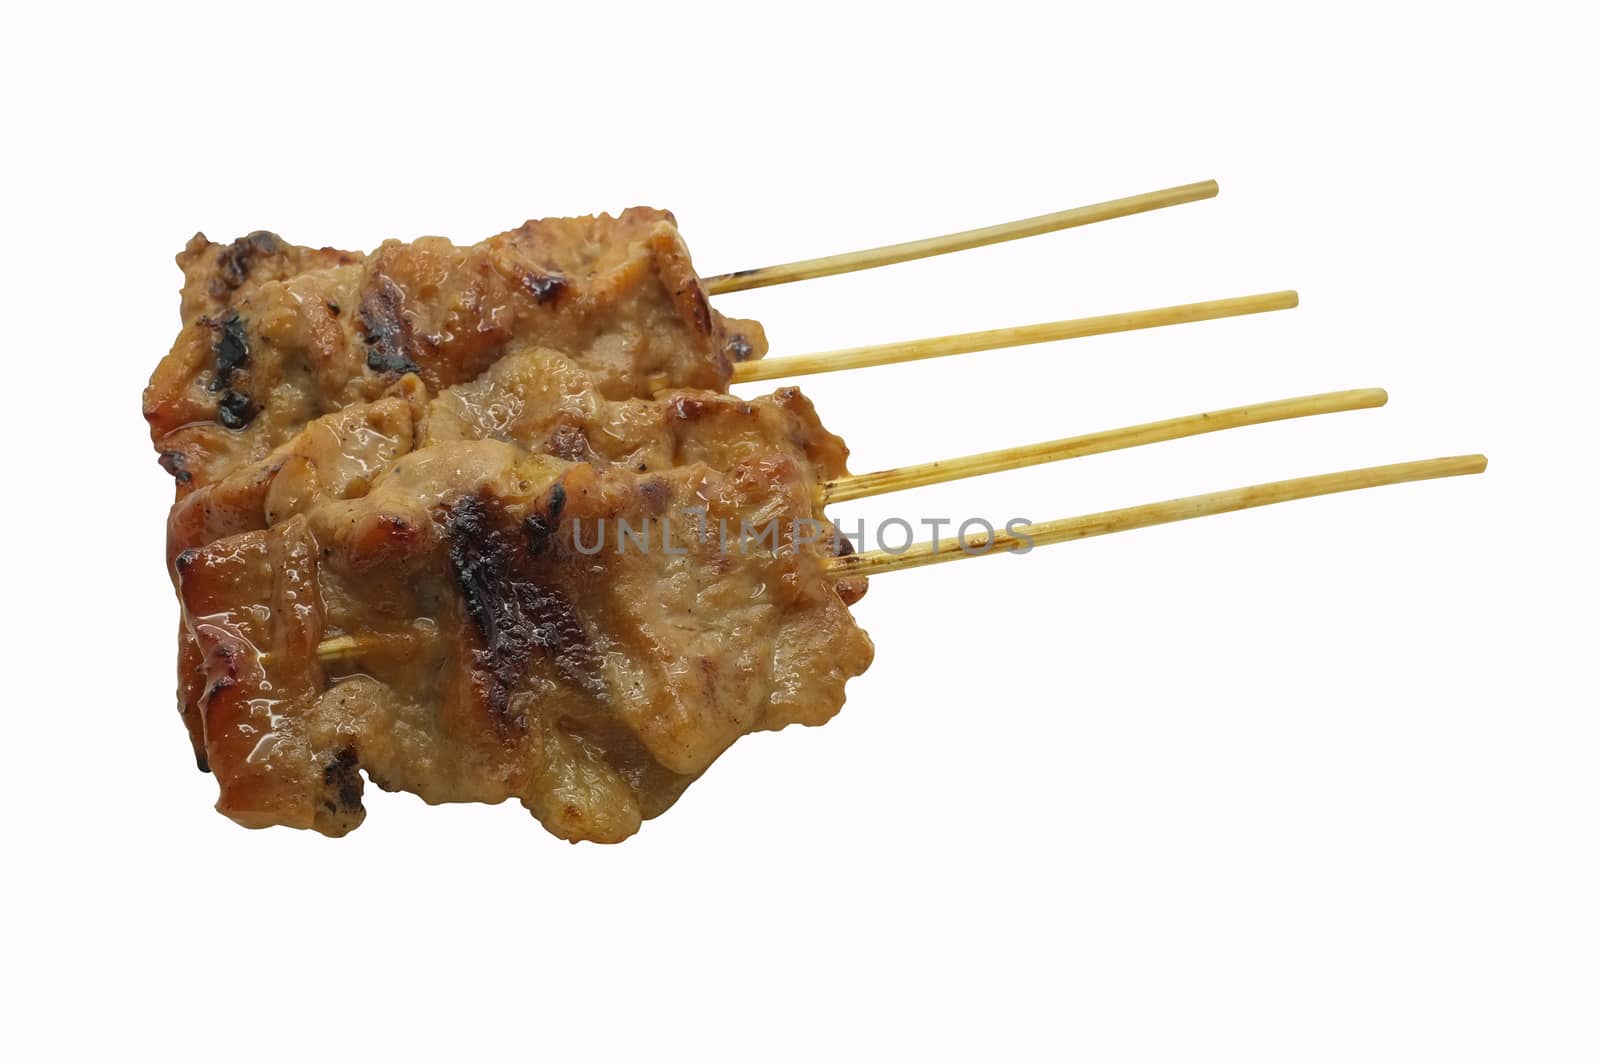 Thai-style roasted pork, grilled pork, pork steak, barbecue pork on skewers